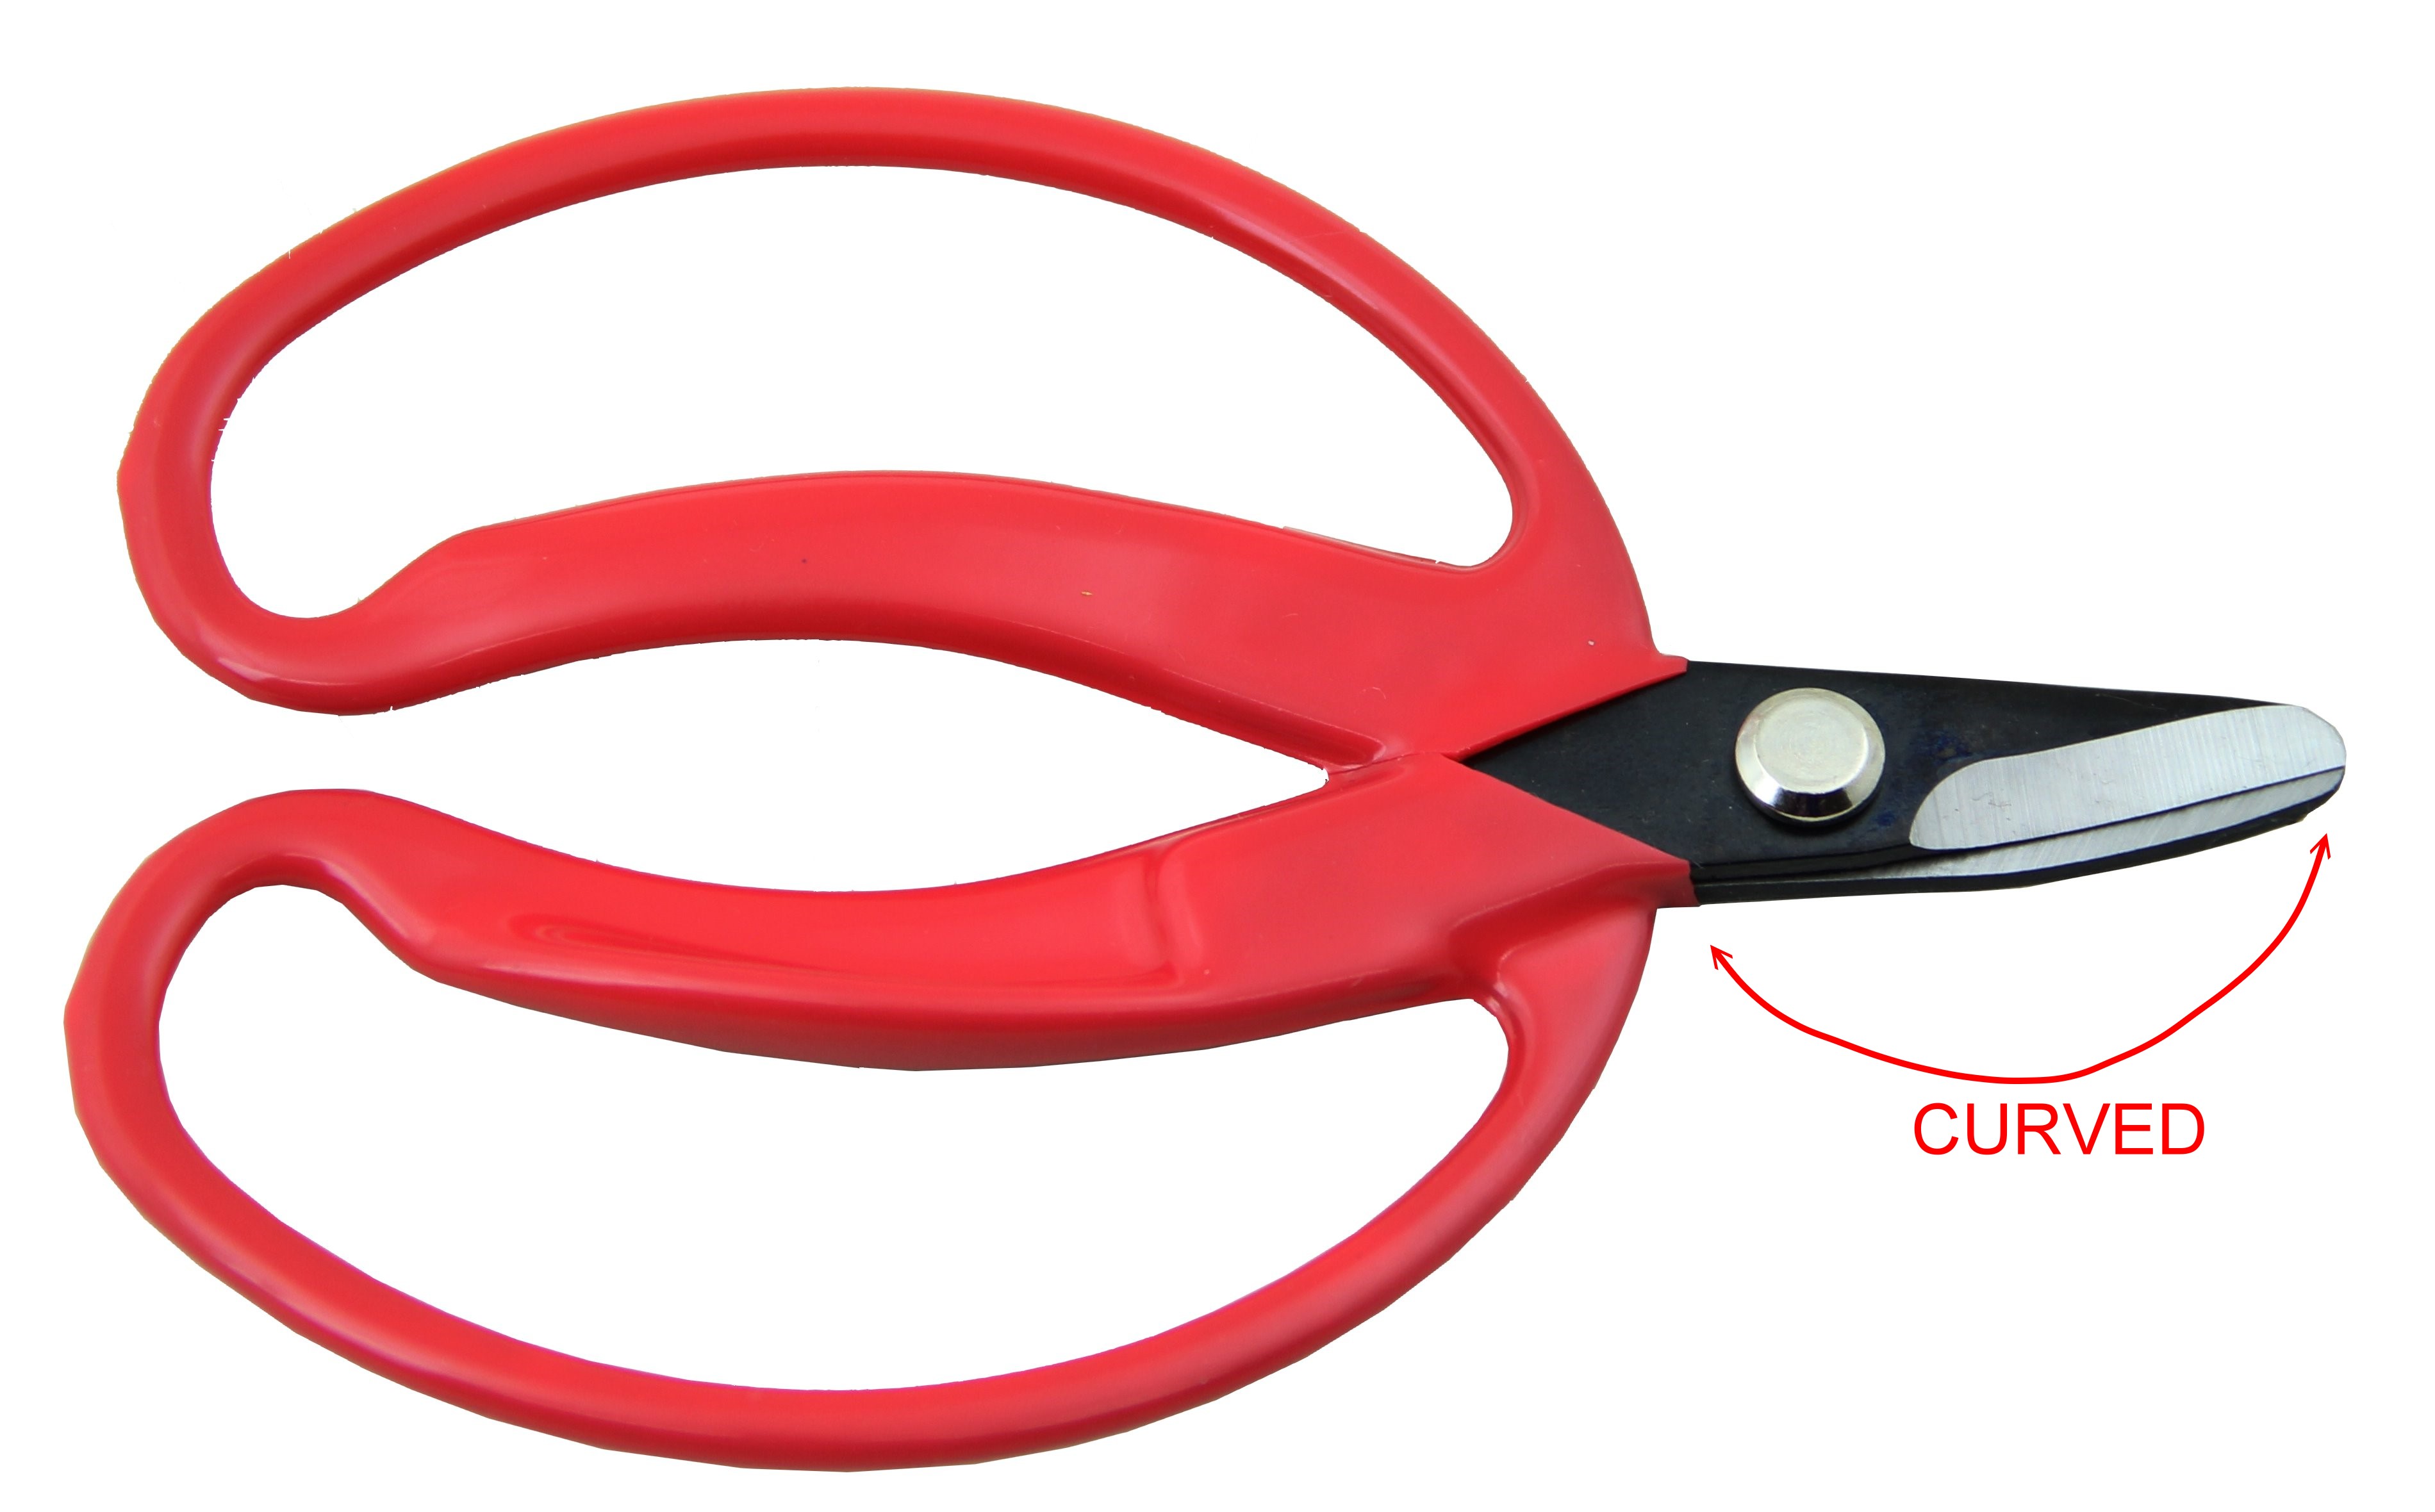 Curved orange scissors - for lady